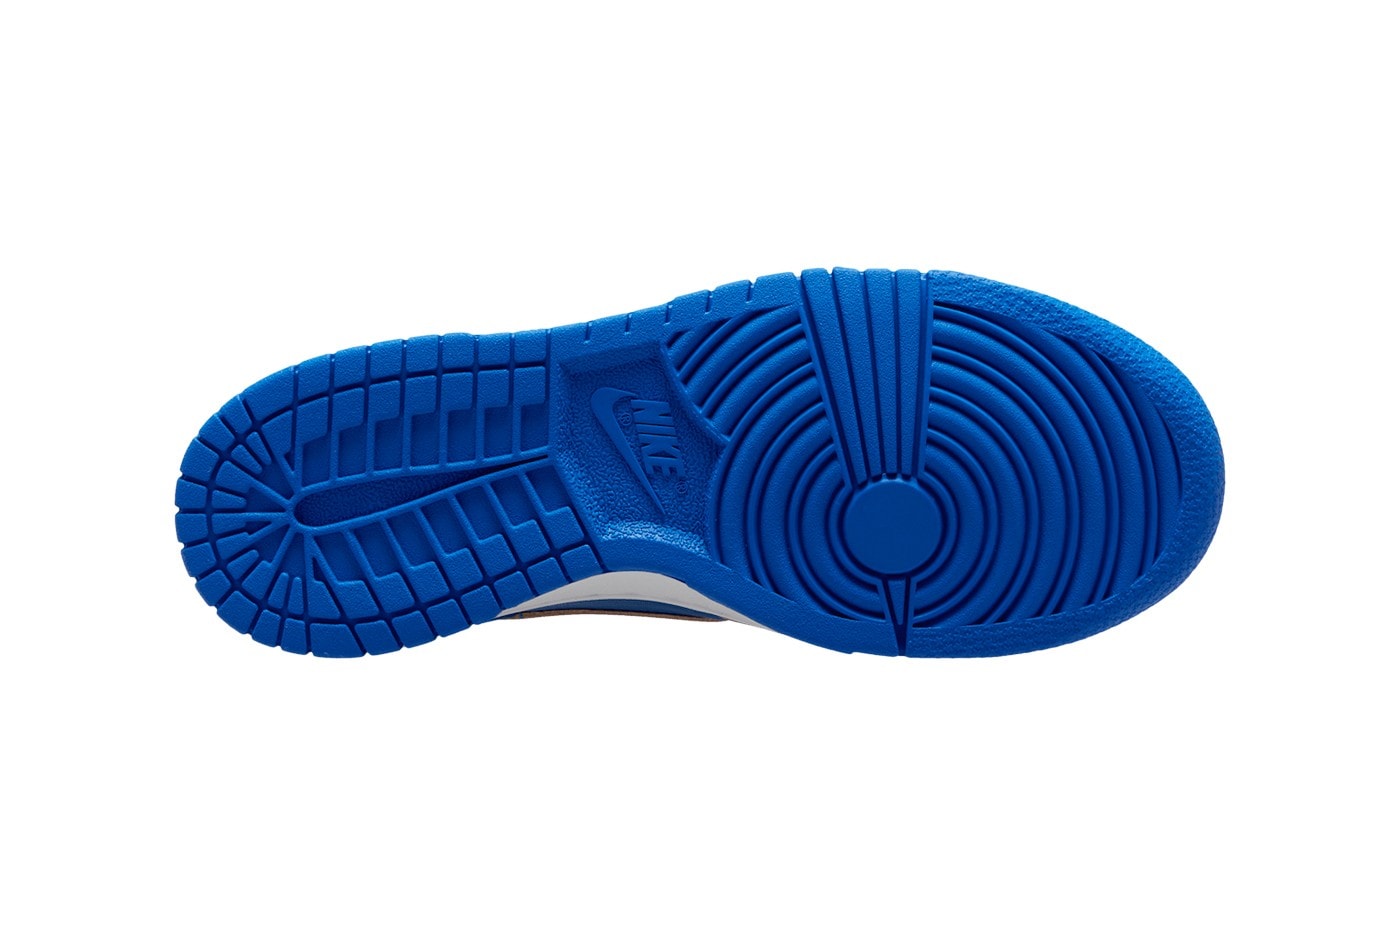 Nike Dunk Low "Salmon Toe" new colorway sneakers footwear 